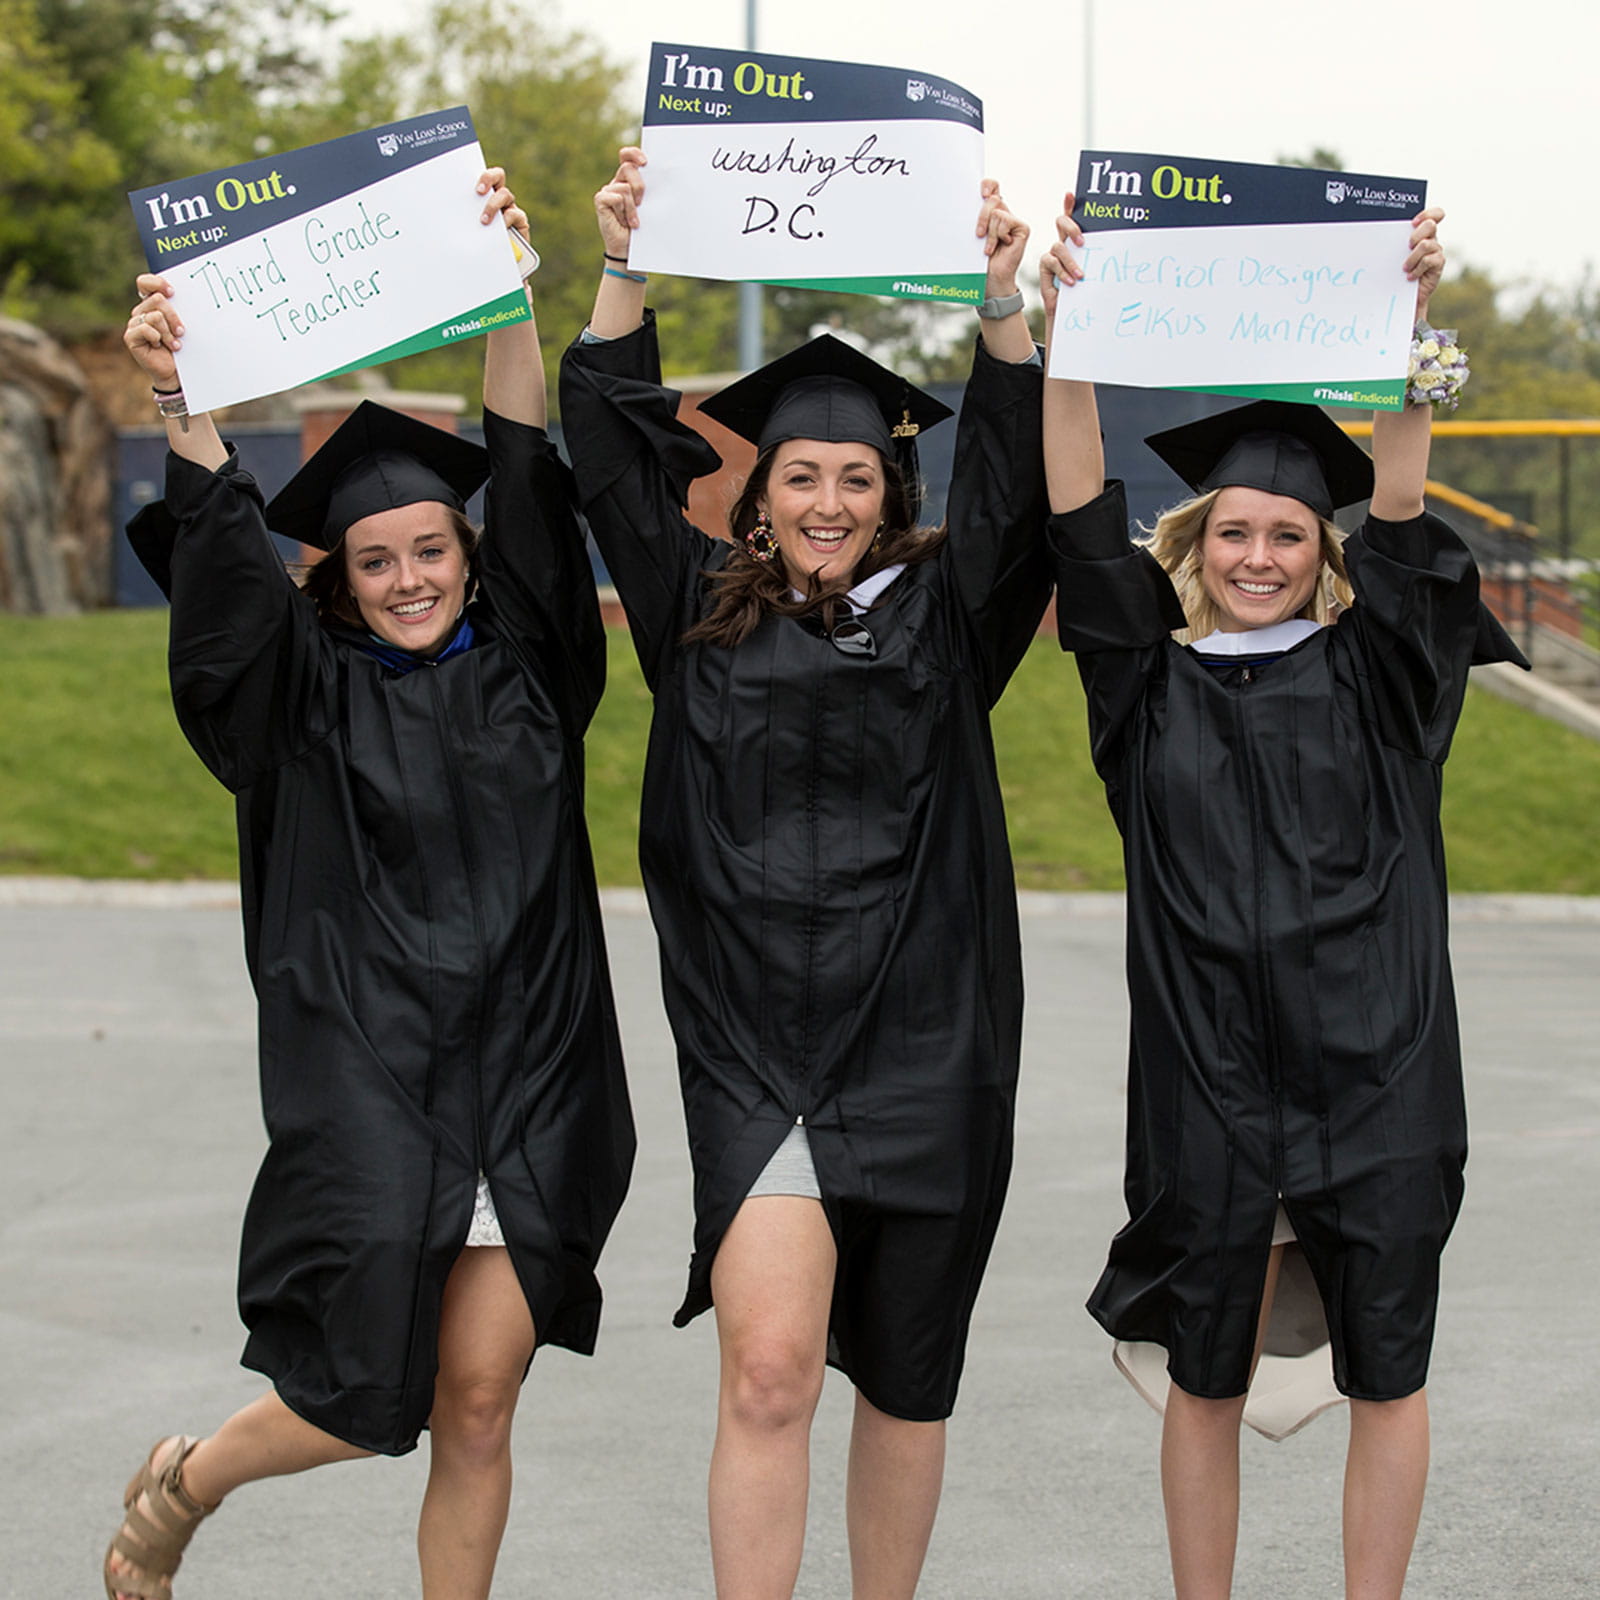 Three graduates holding up social media signs